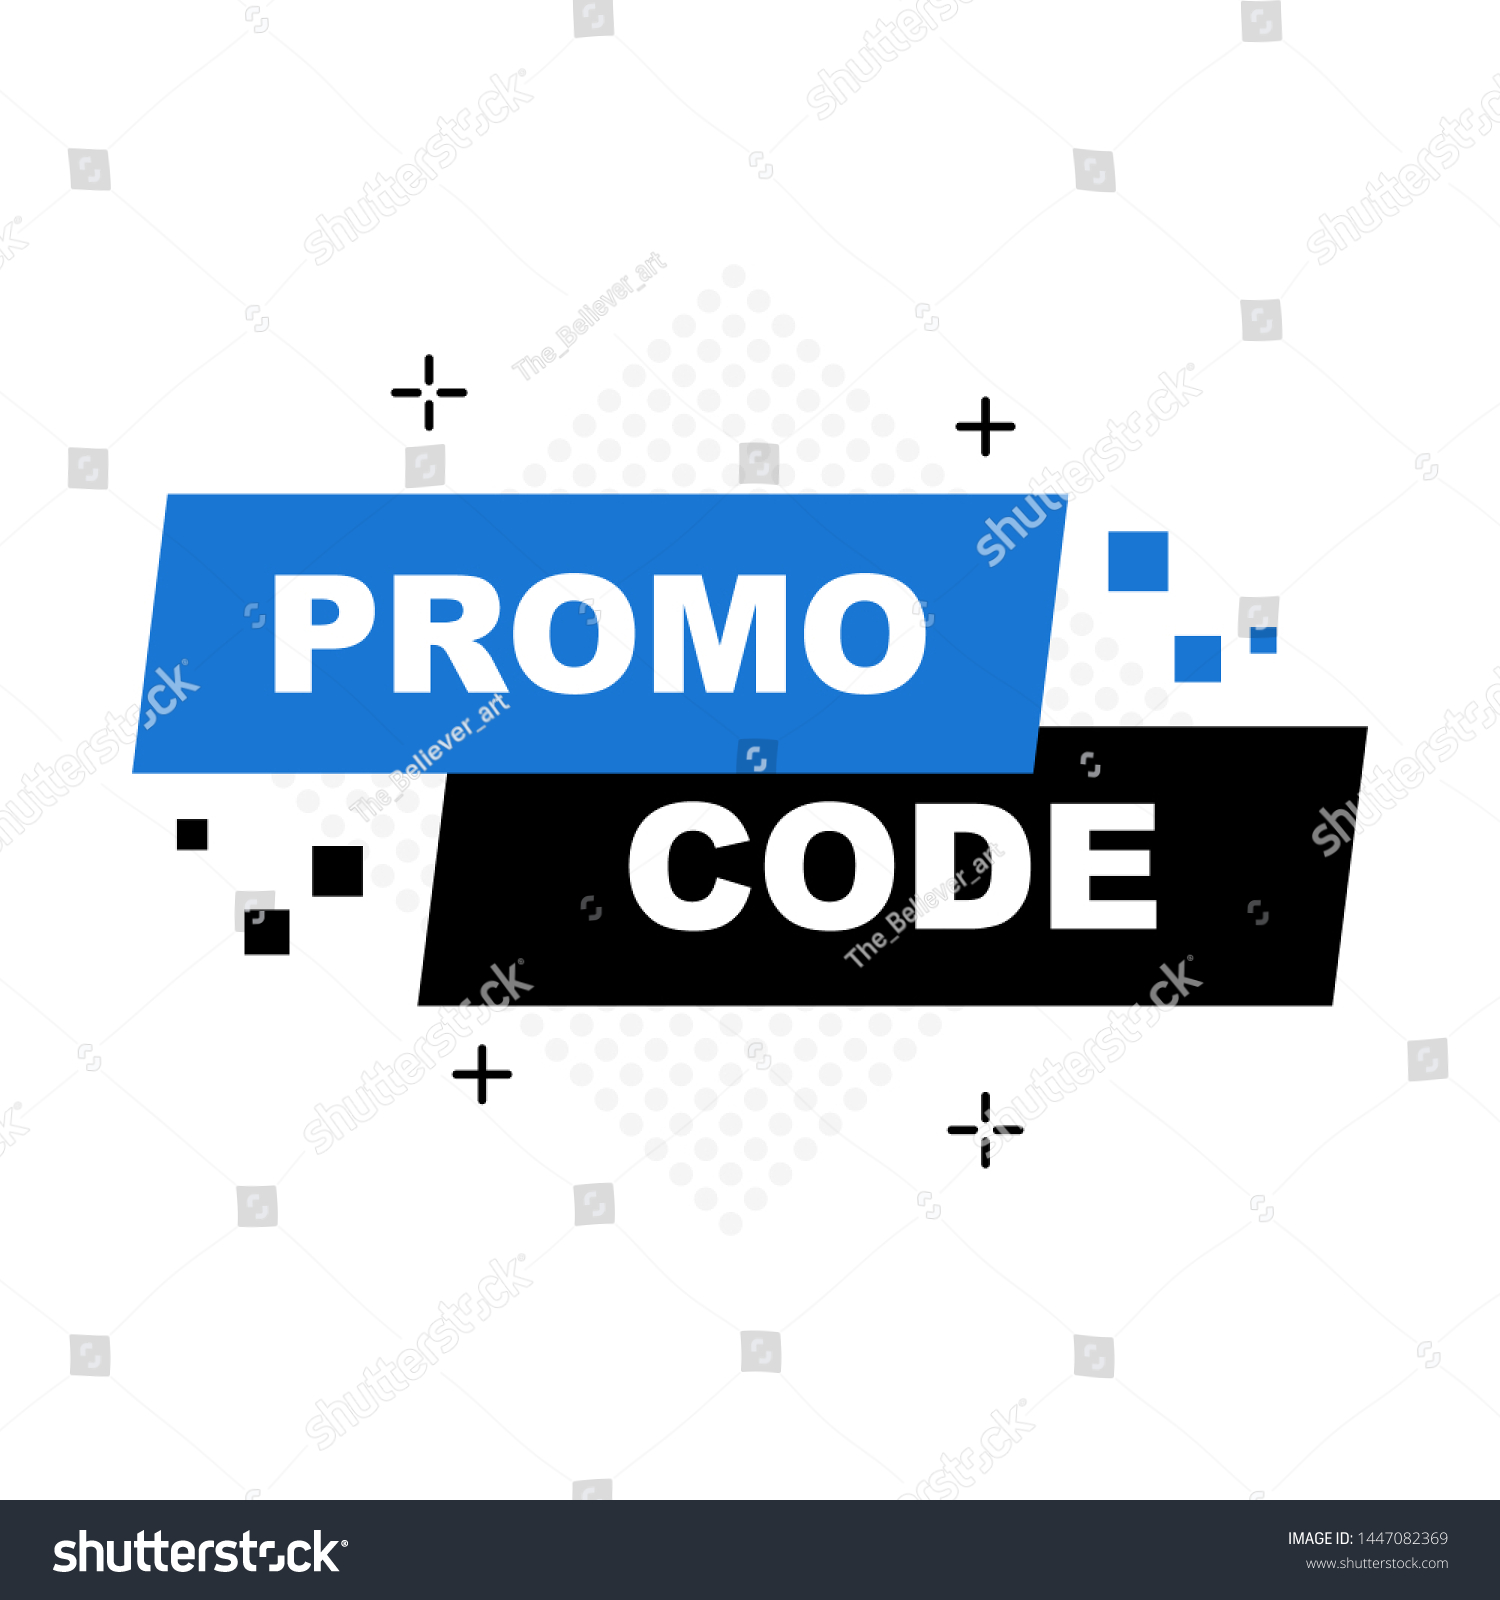 Https promo code